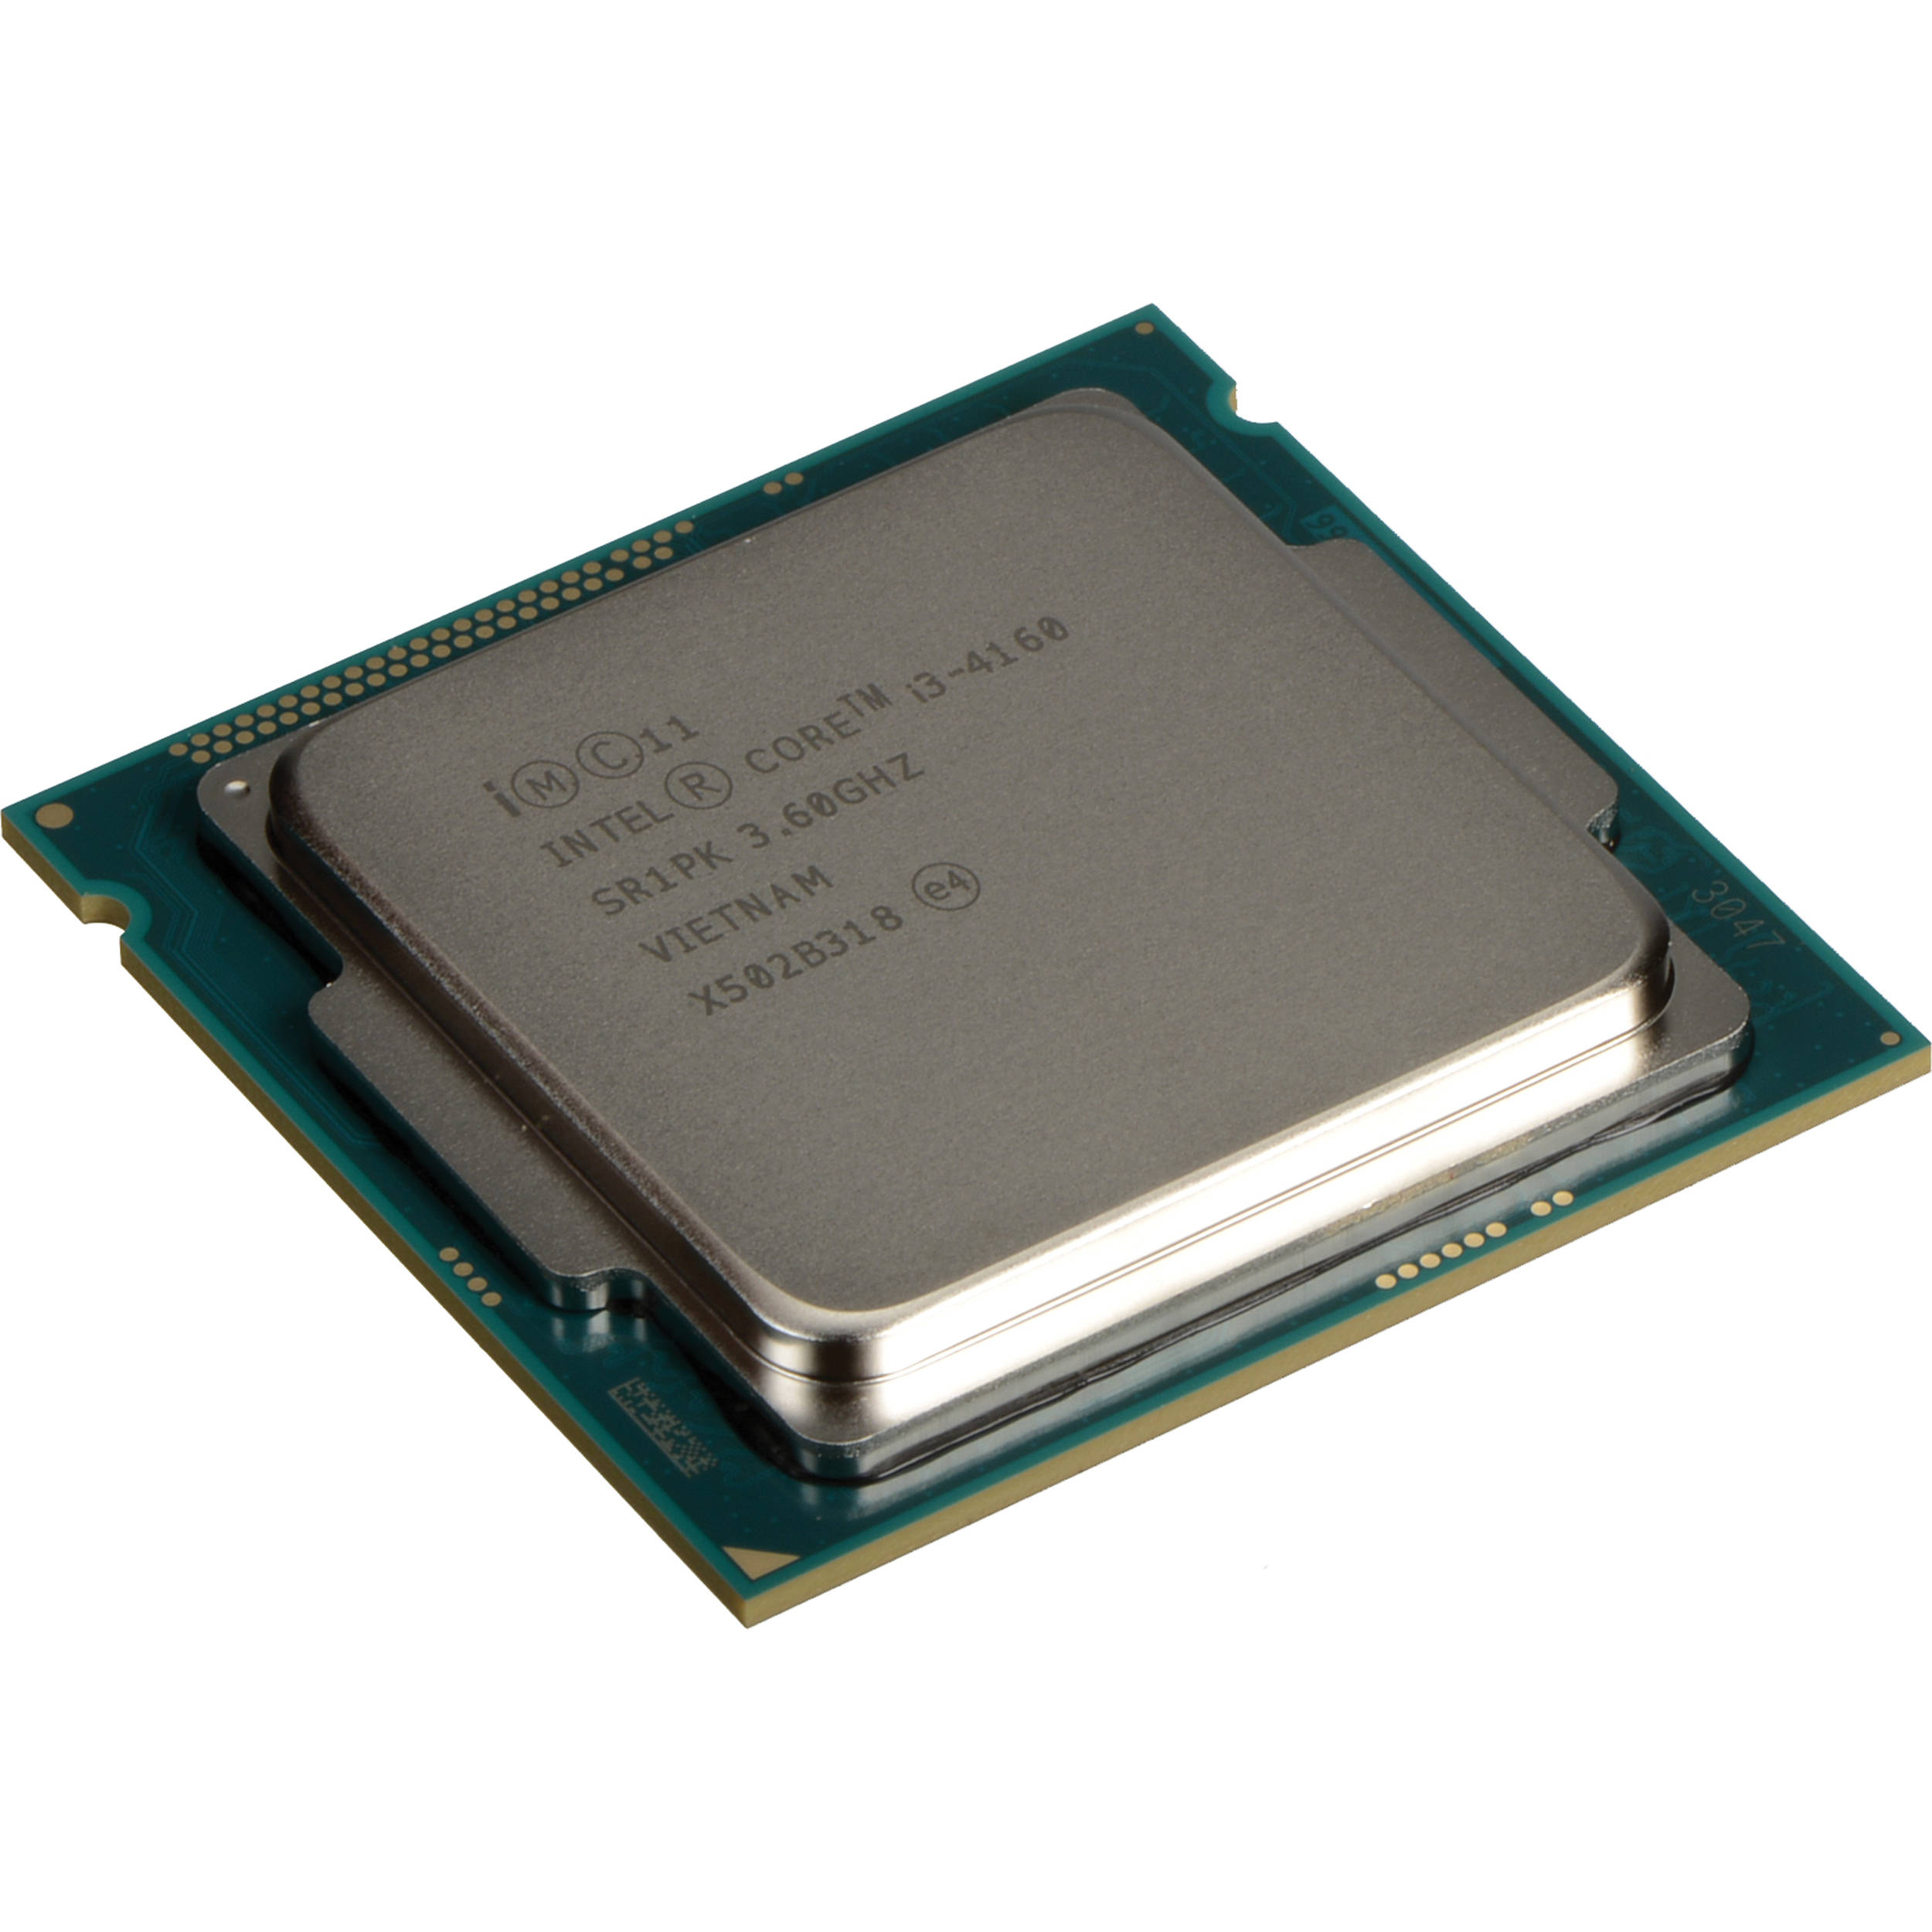 Intel i5 4400. Процессор Intel Core i3 4160. Intel(r) Core(TM) i3-4160 CPU @ 3.60GHZ 3.60 GHZ. Intel Core i 3 3.60 GHZ. Процессор Intel Core i3-4160 OEM.